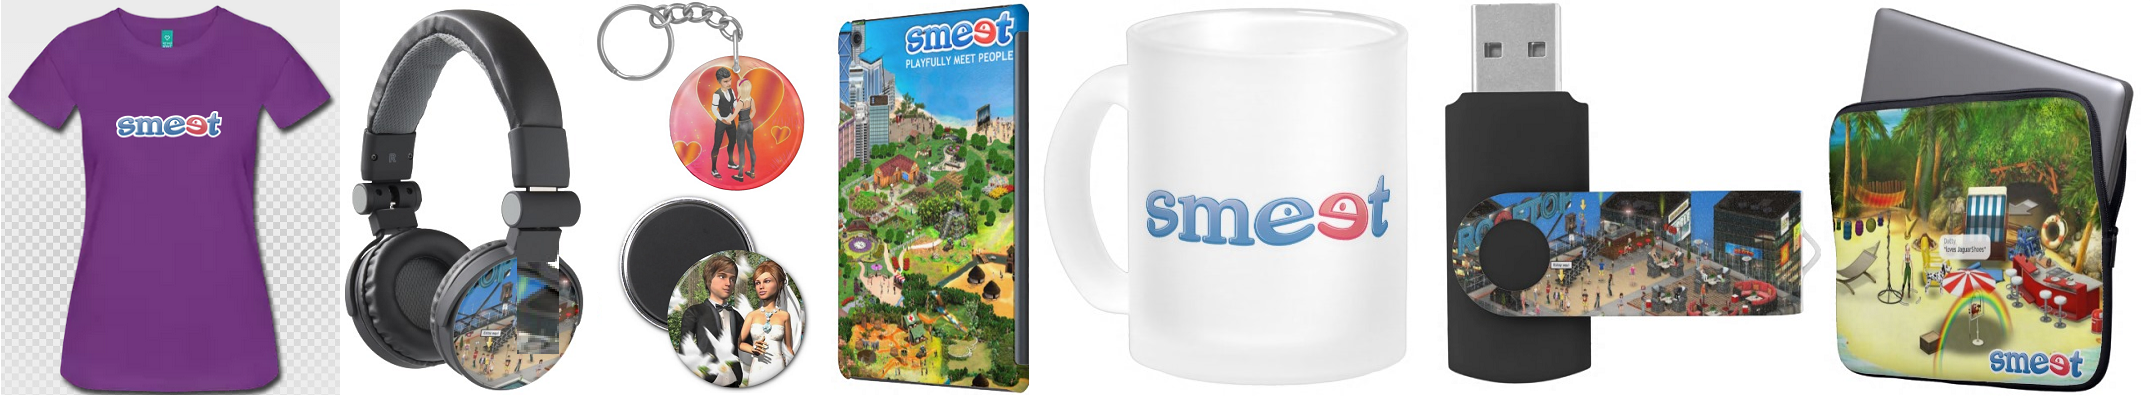 Smeet Store – Merchandise